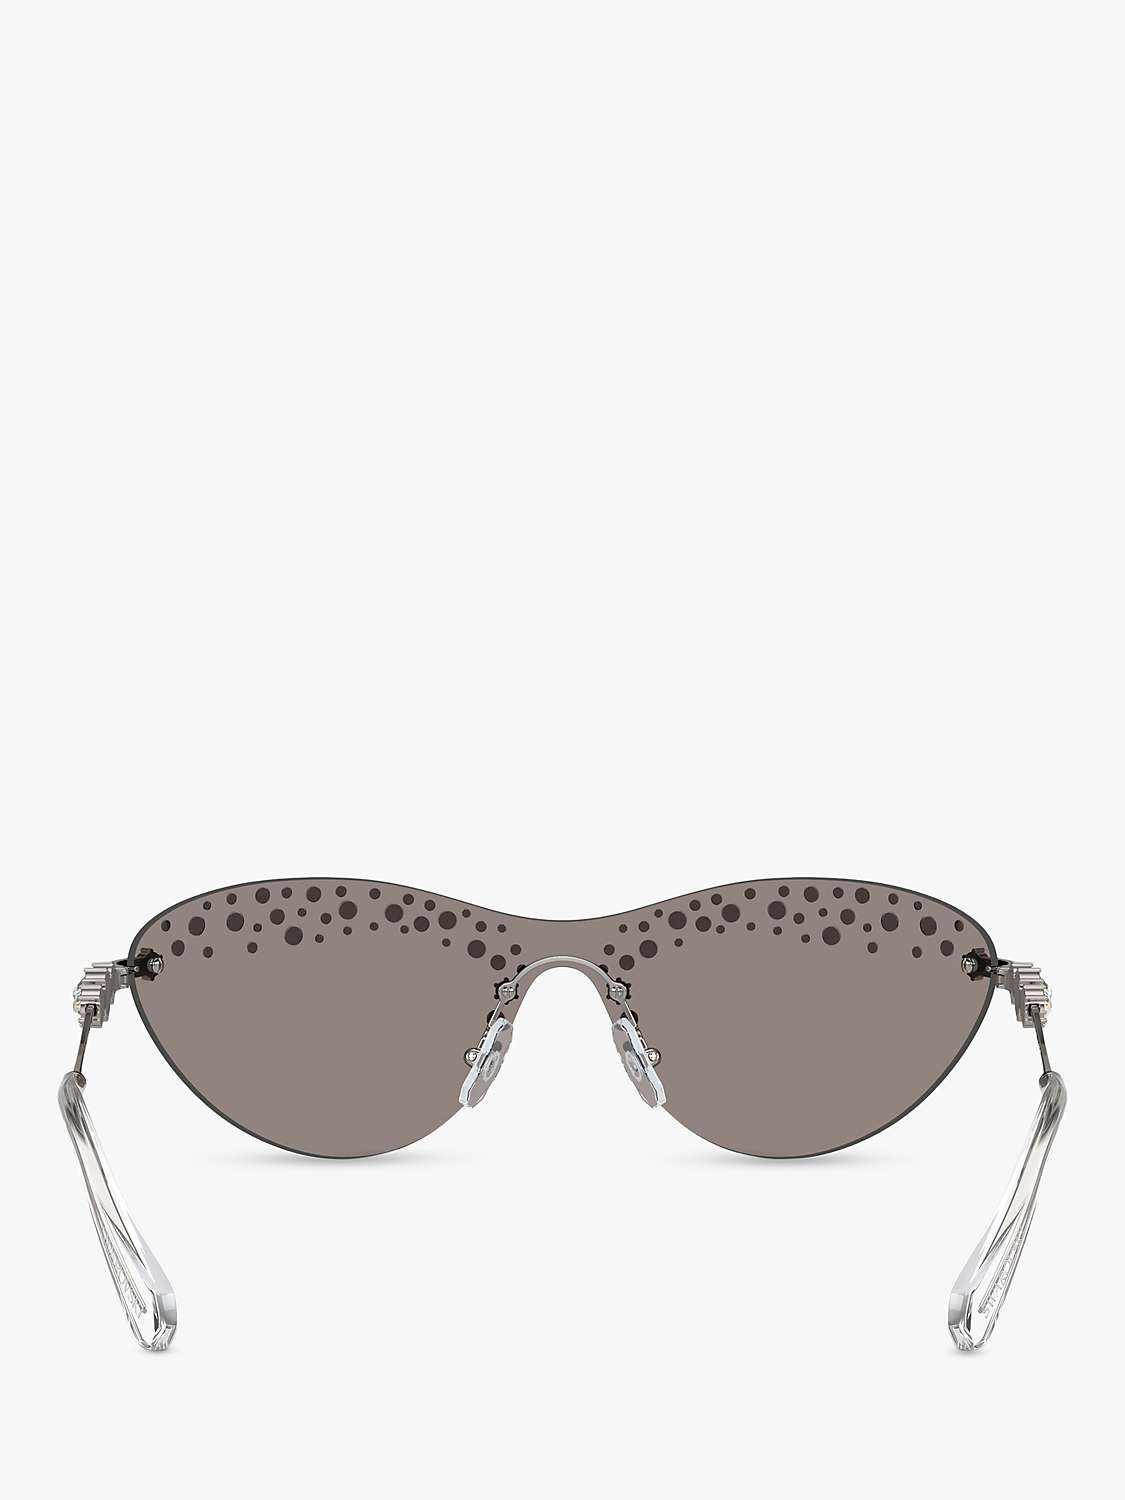 Buy Swarovski SK7023 Women's Wrap Sunglasses Online at johnlewis.com